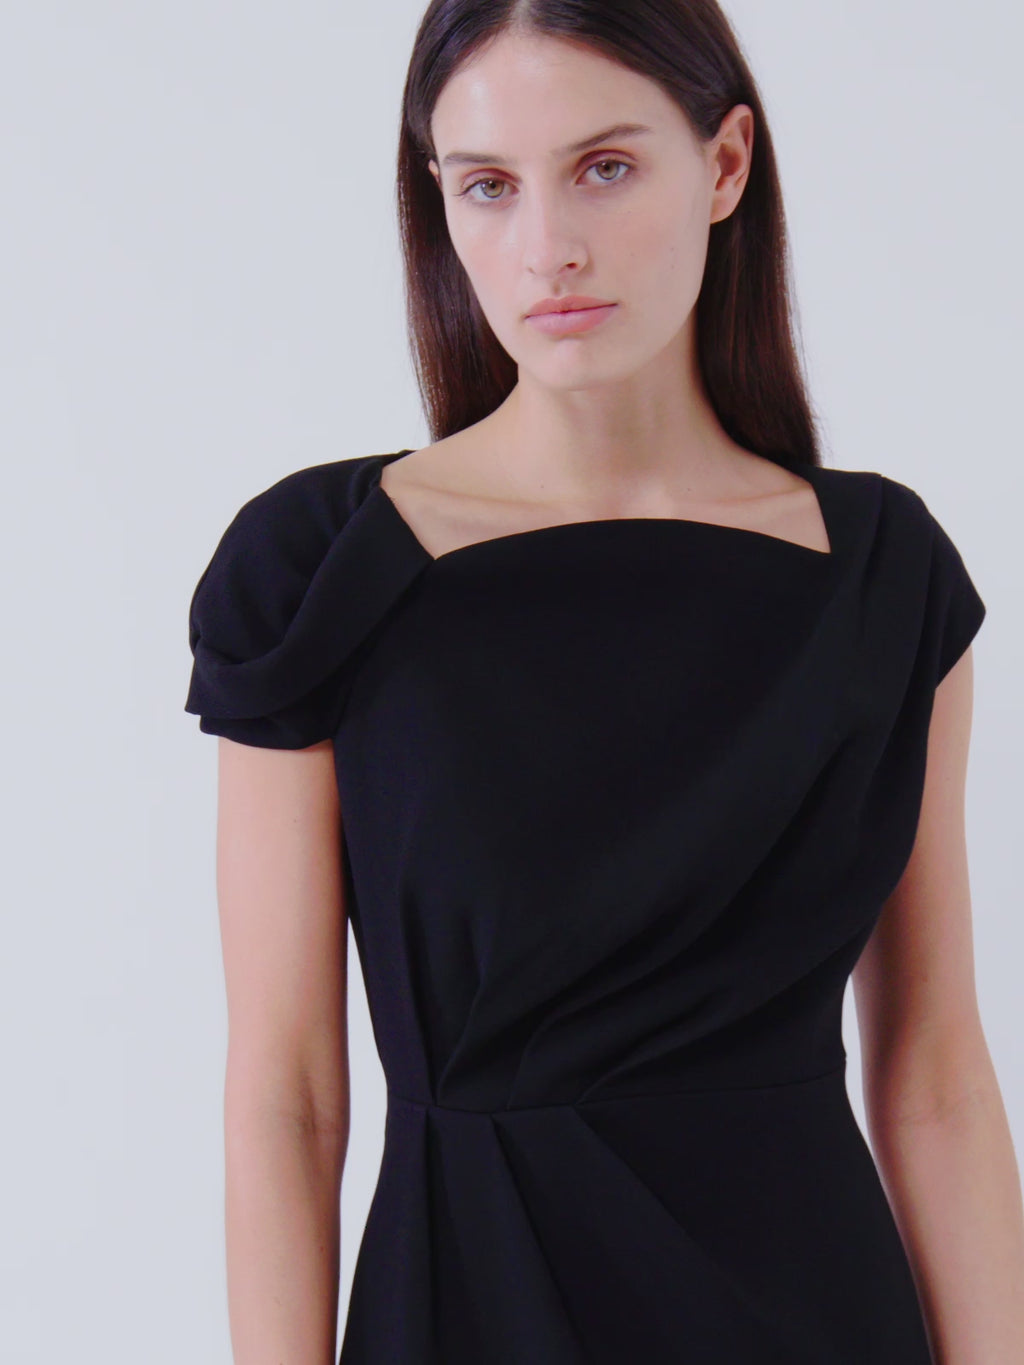 Lukas Dress in Black | Shop Rachel Gilbert Online